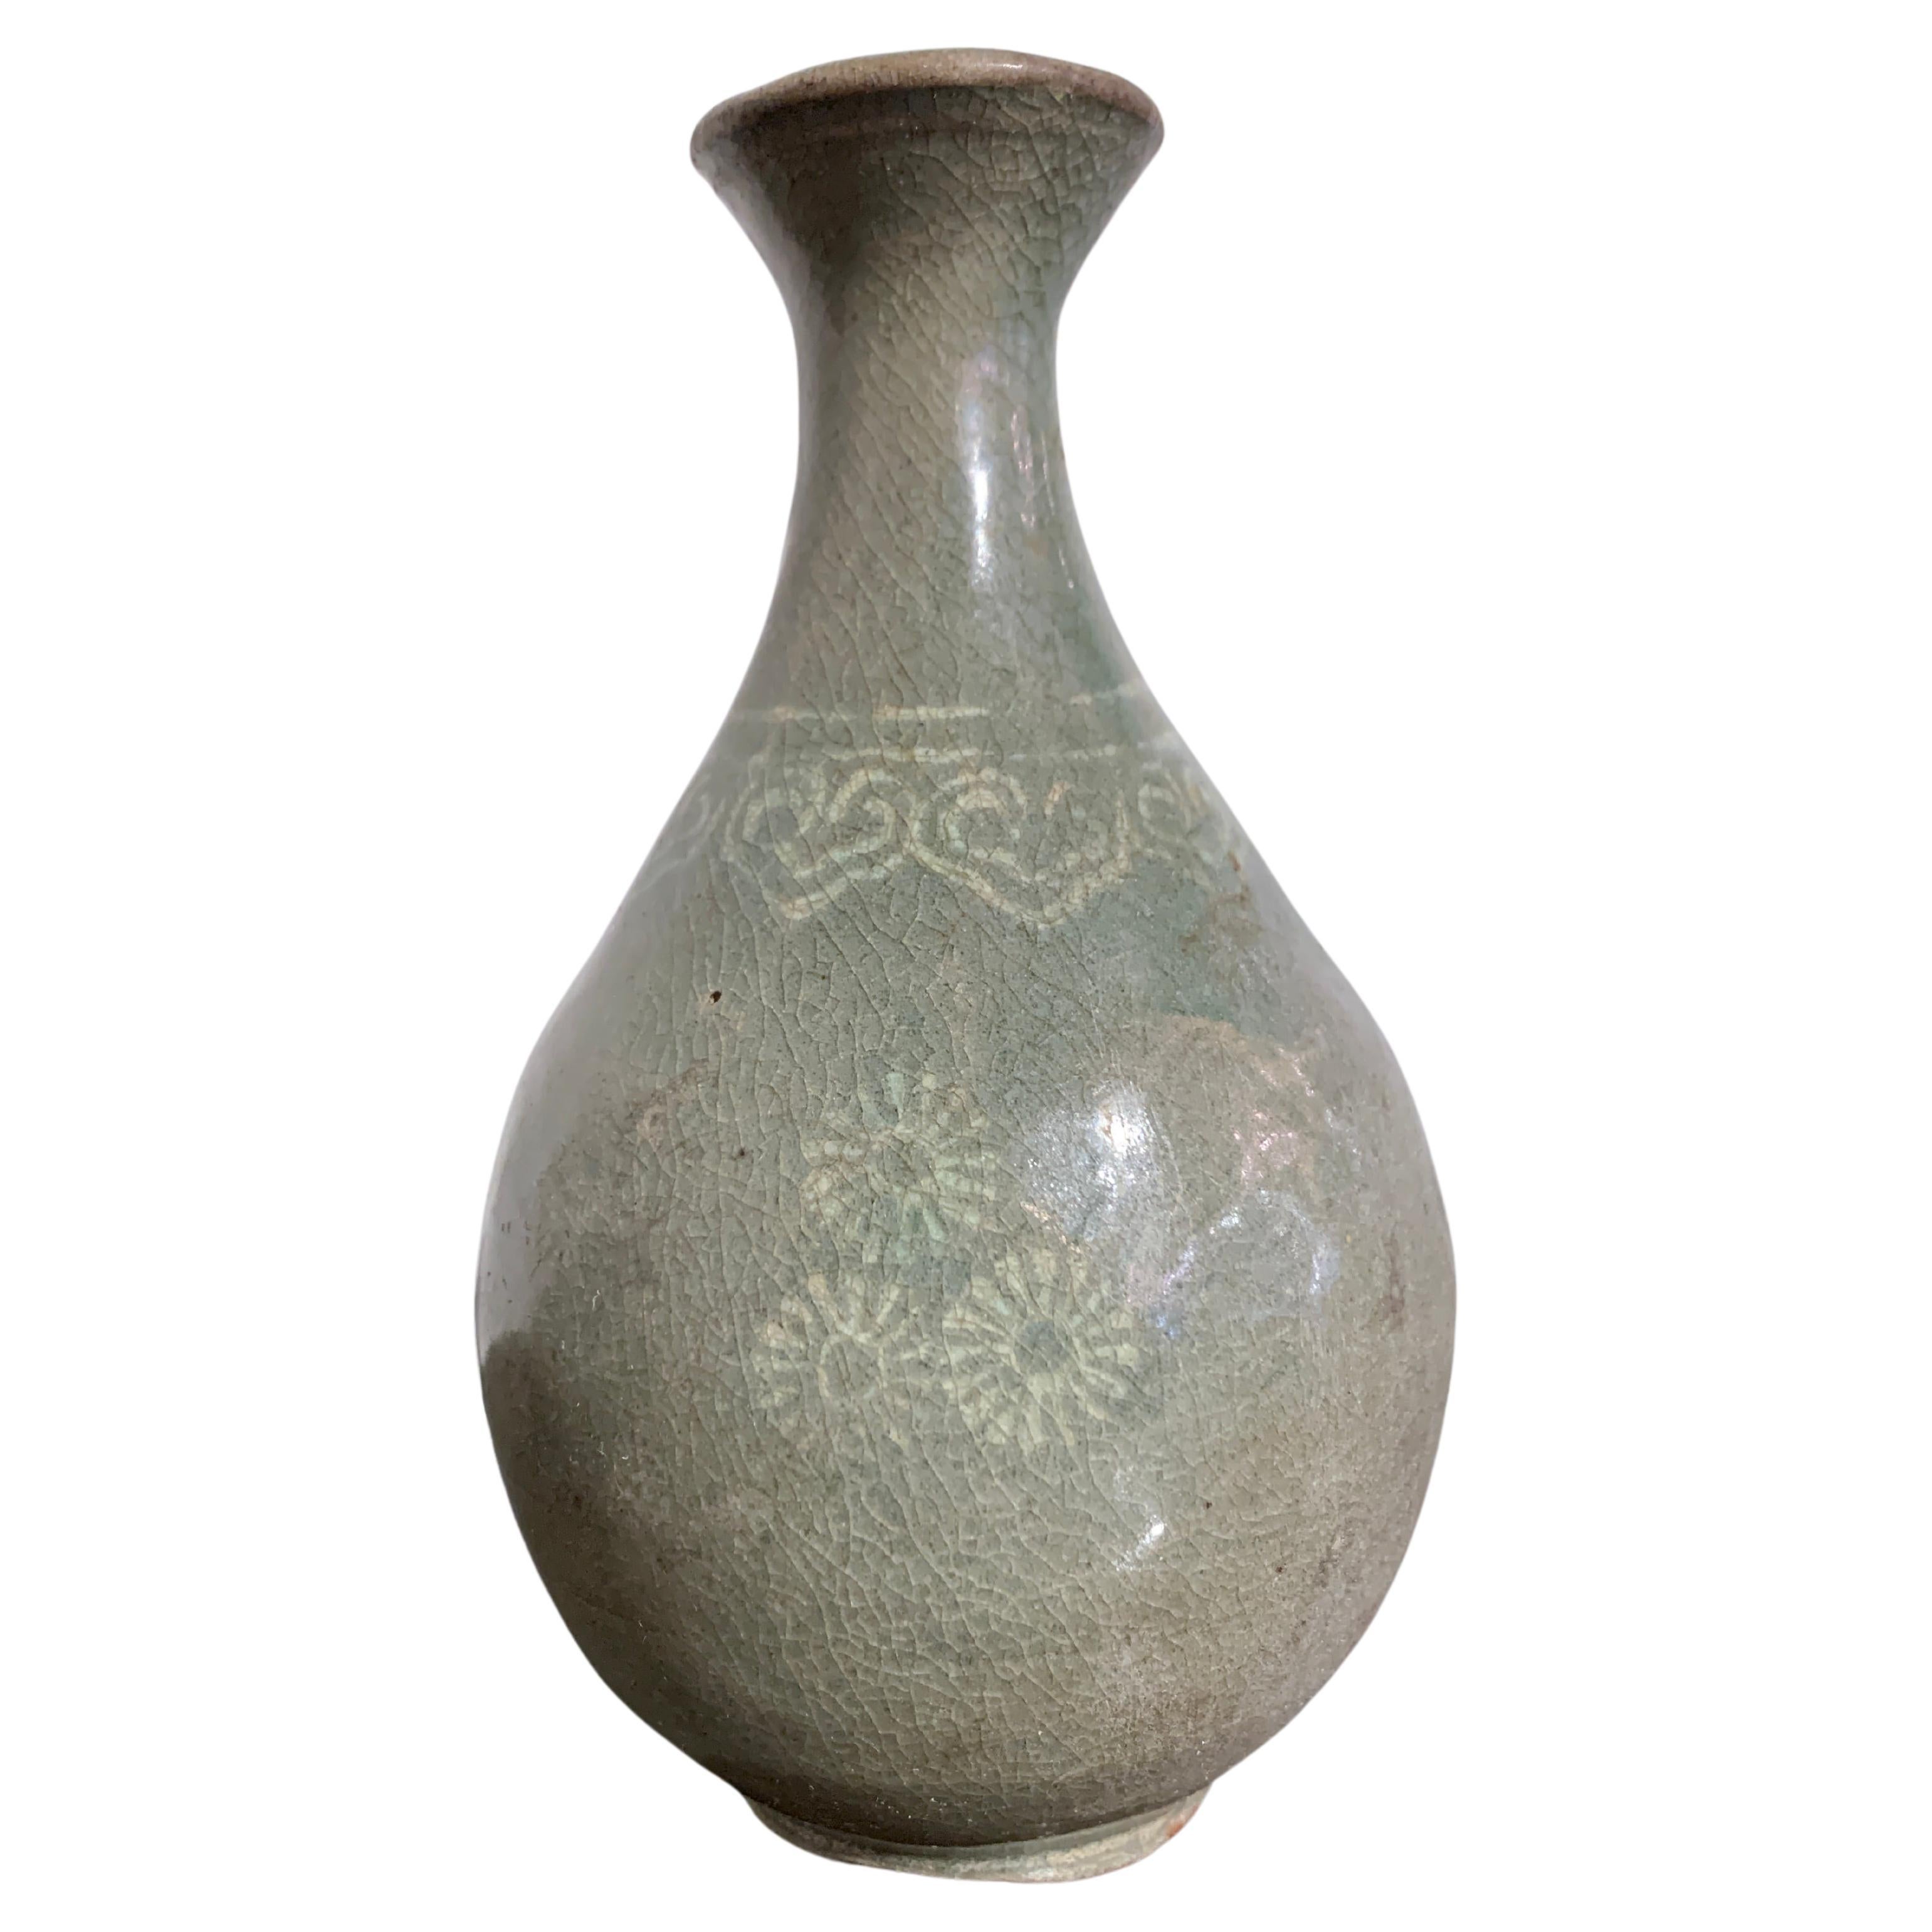 What is Korean celadon pottery?